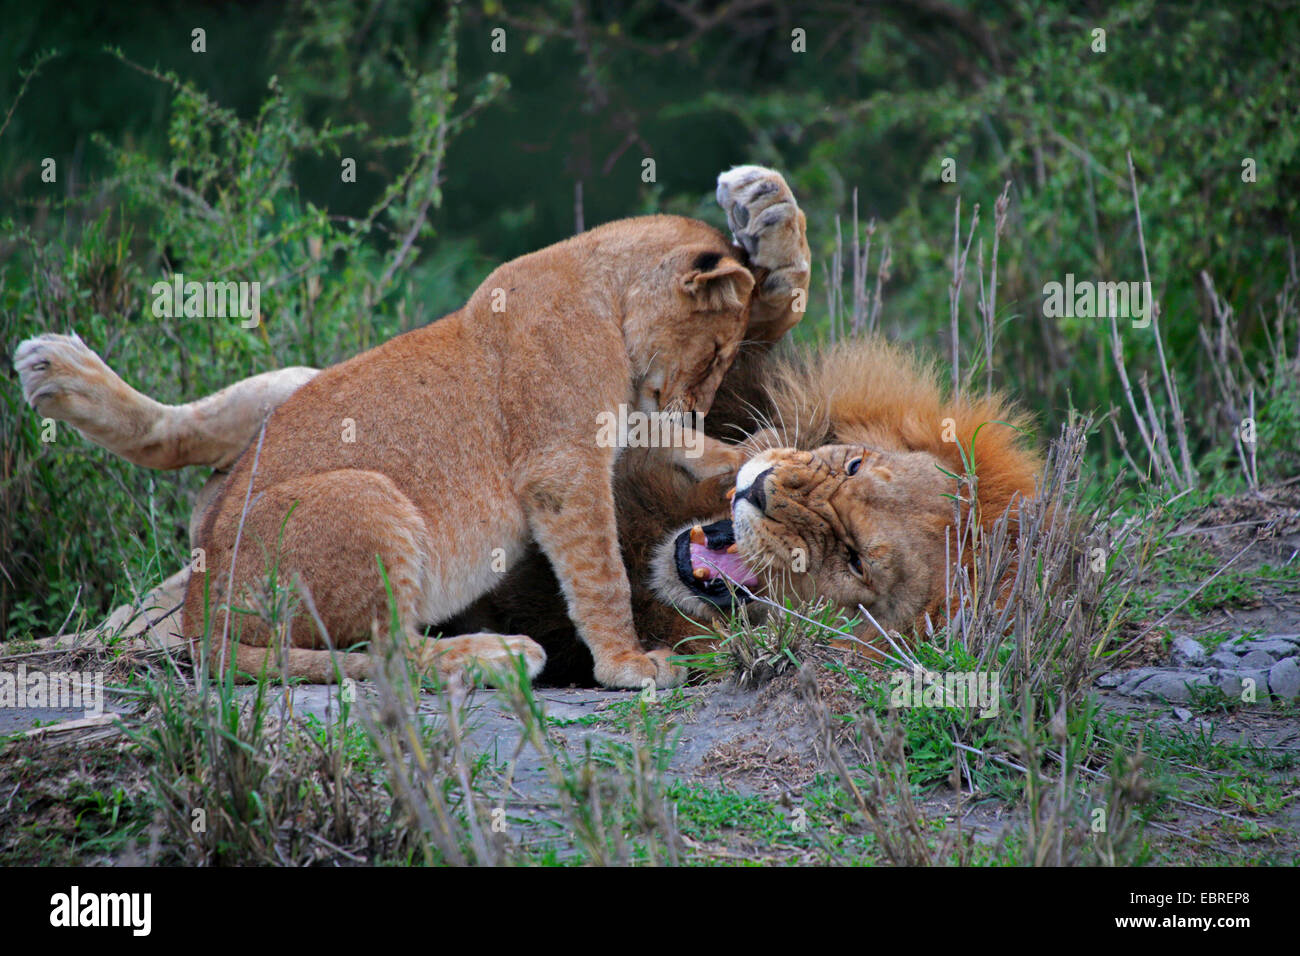 lion (Panthera leo), male lion romping with a young animal, Tanzania, Serengeti National Park Stock Photo